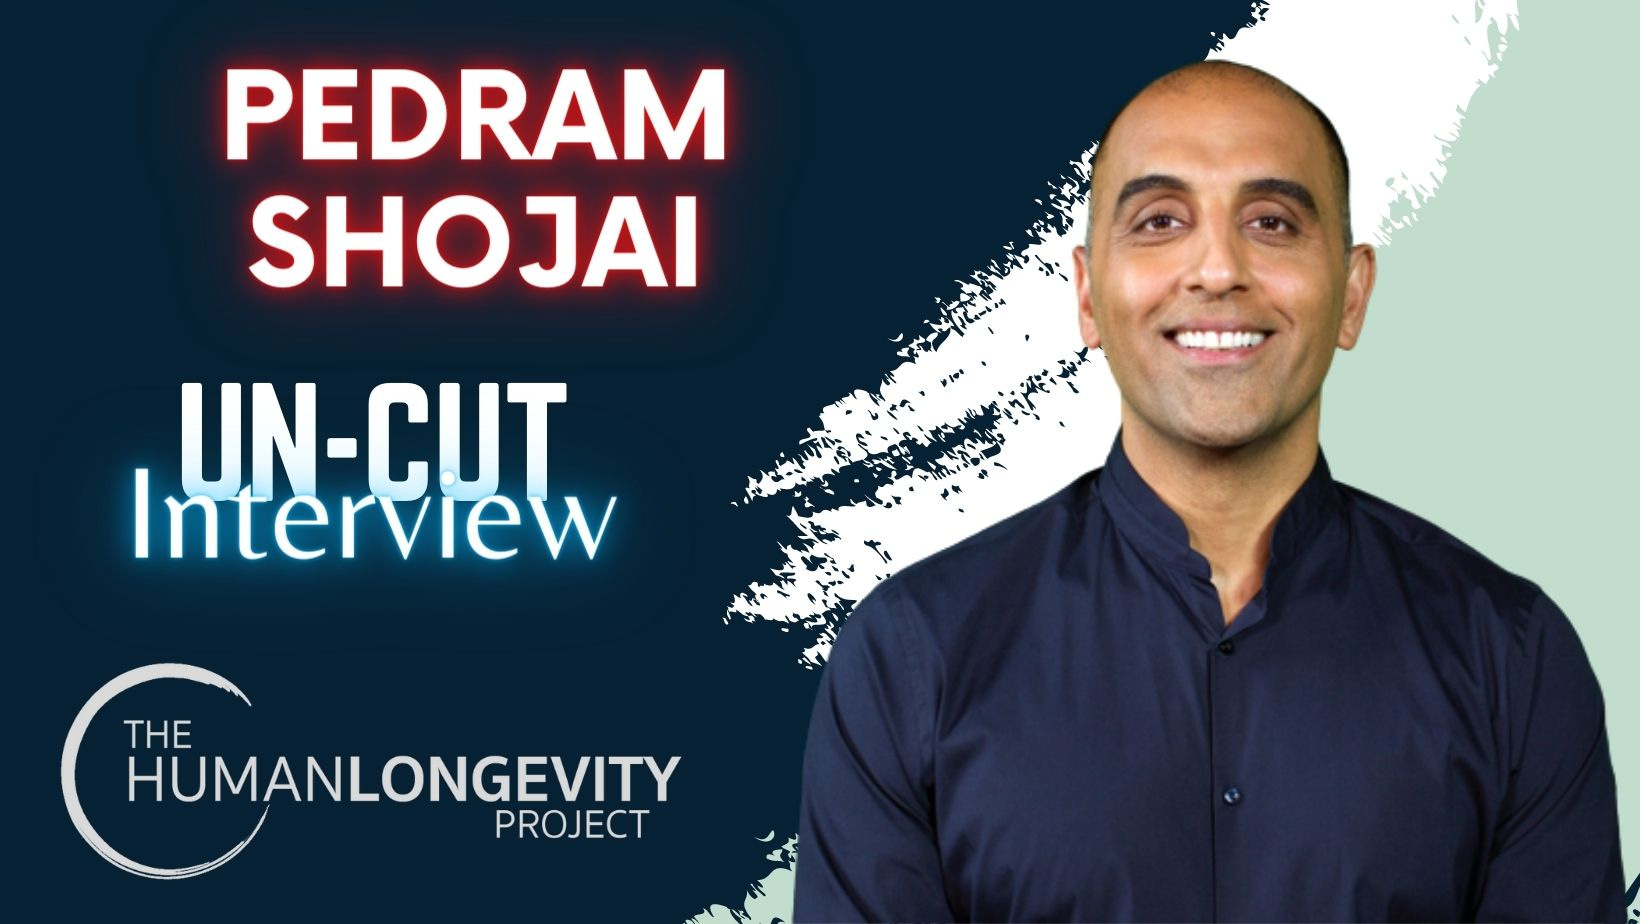 Human Longevity Project Uncut Interview With Pedram Shojai